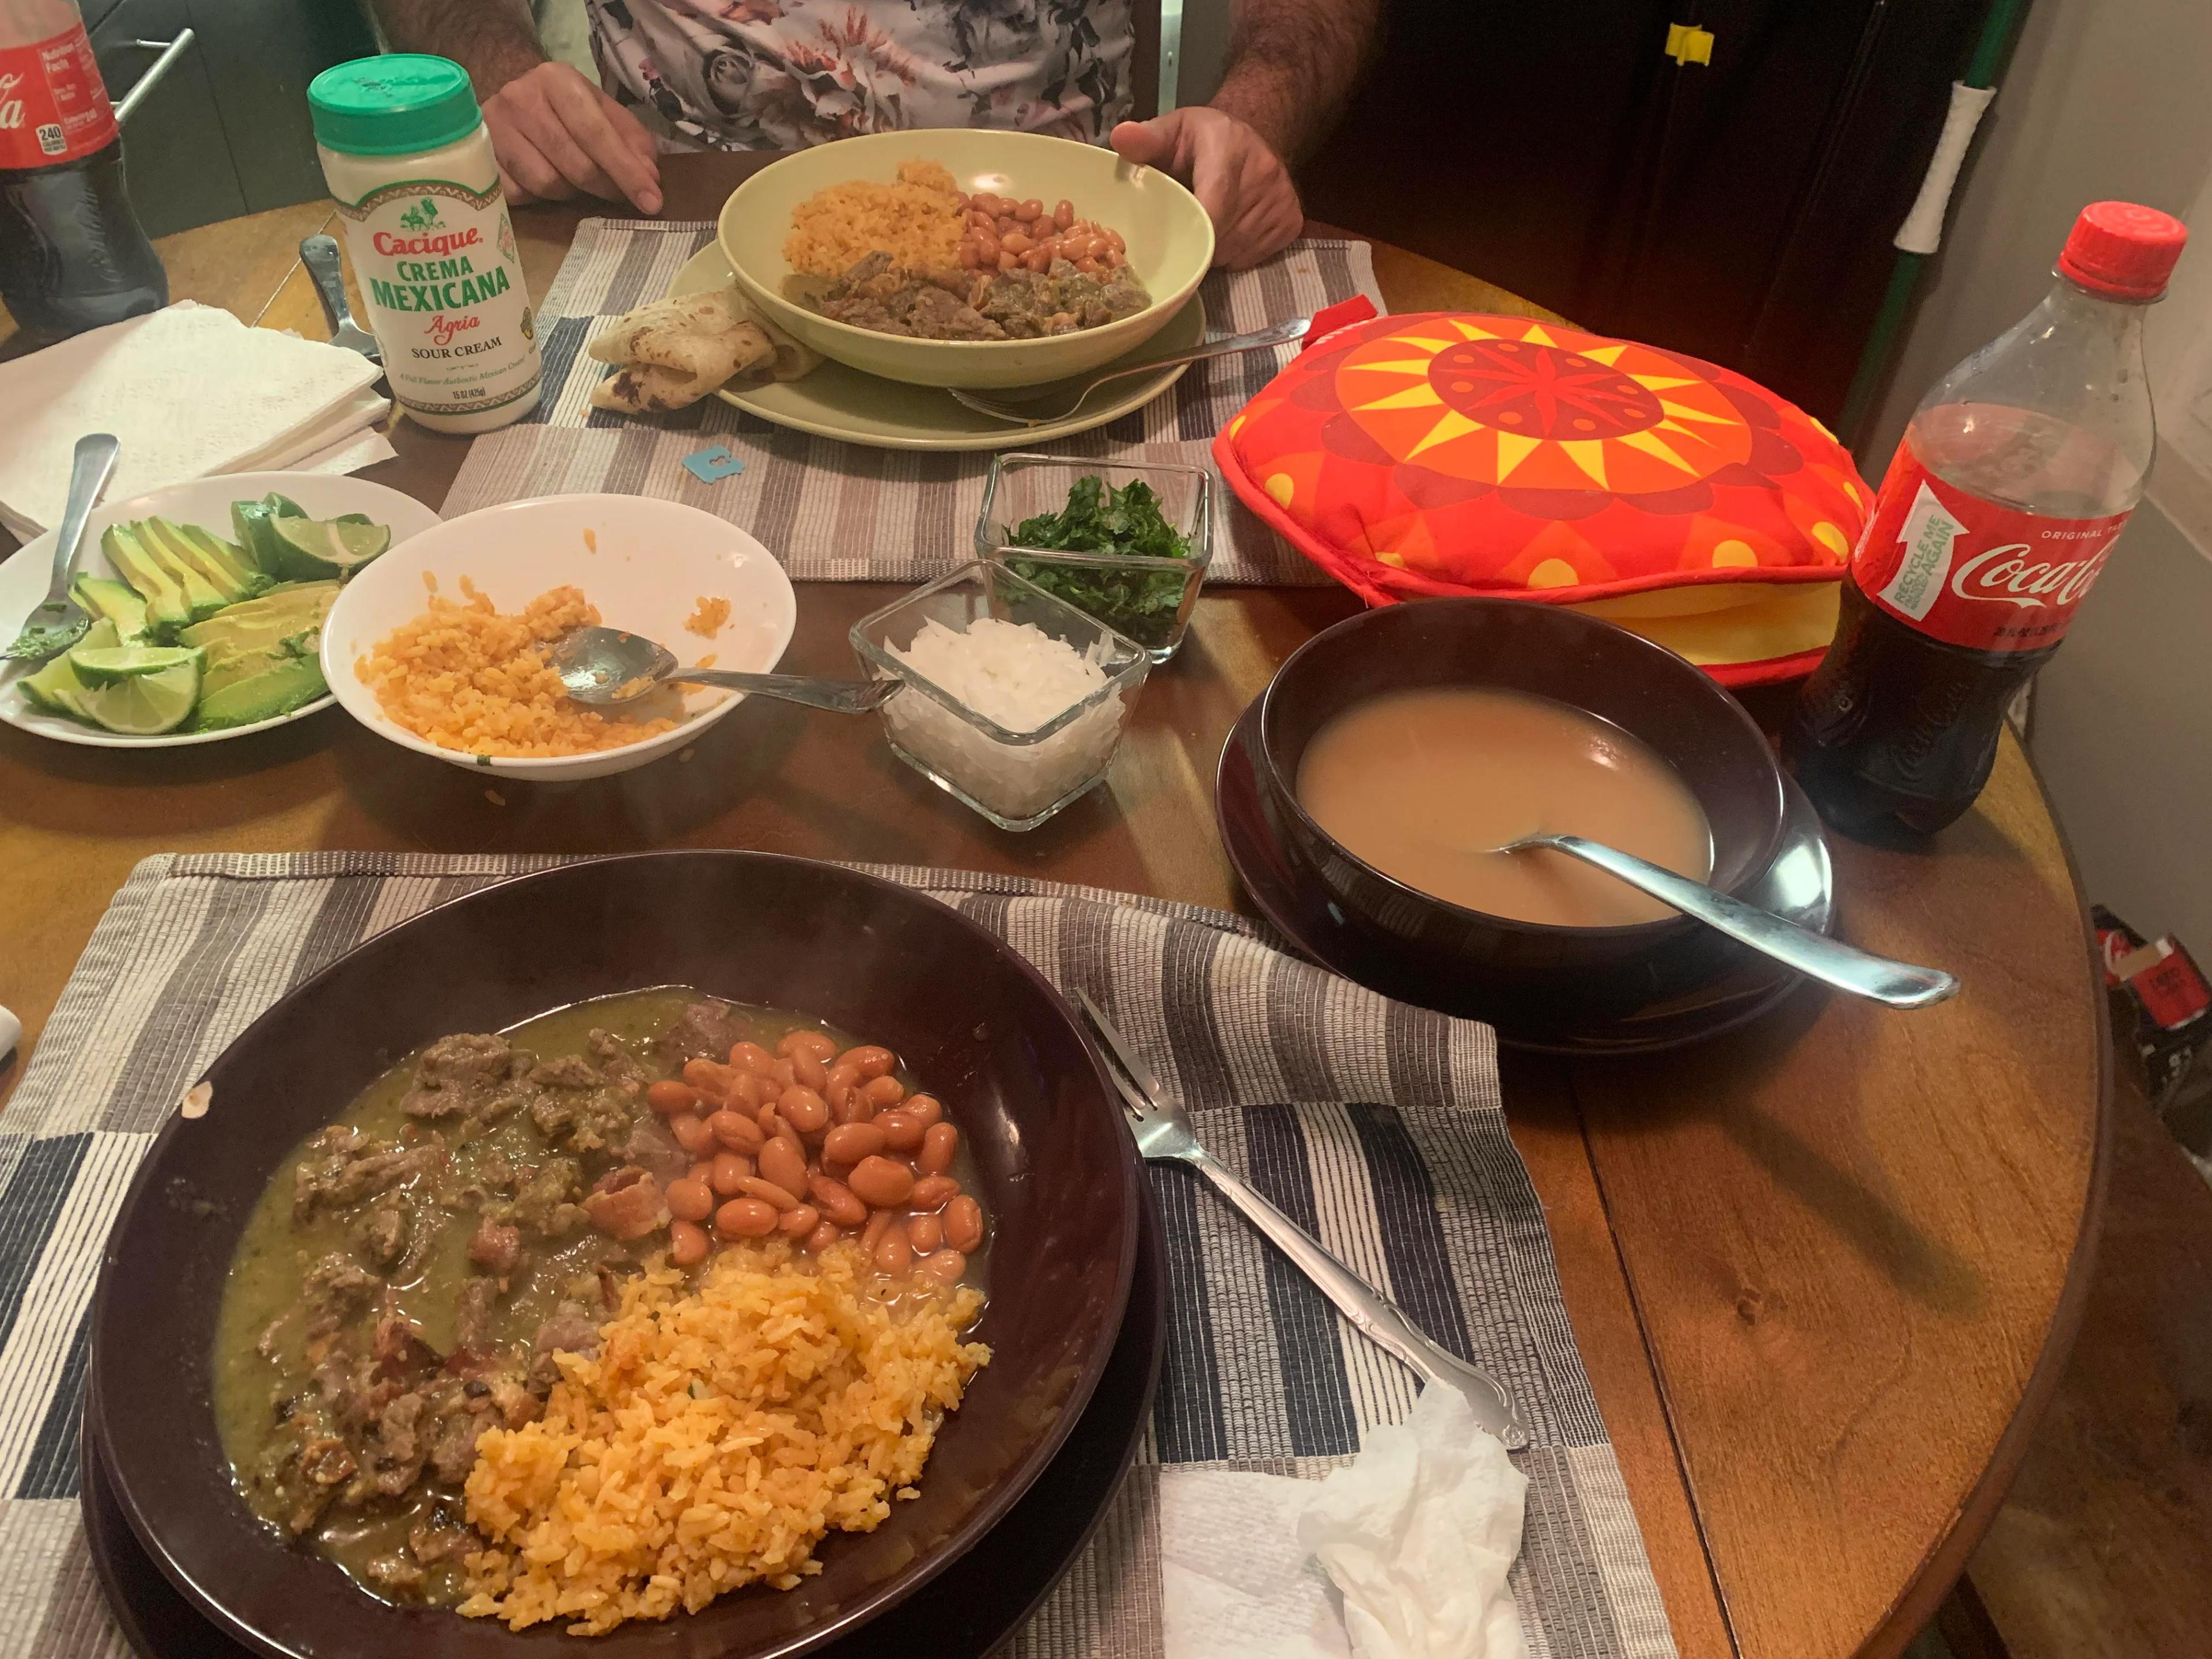 Carne en su jugo for a late dinner : r/mexicanfood